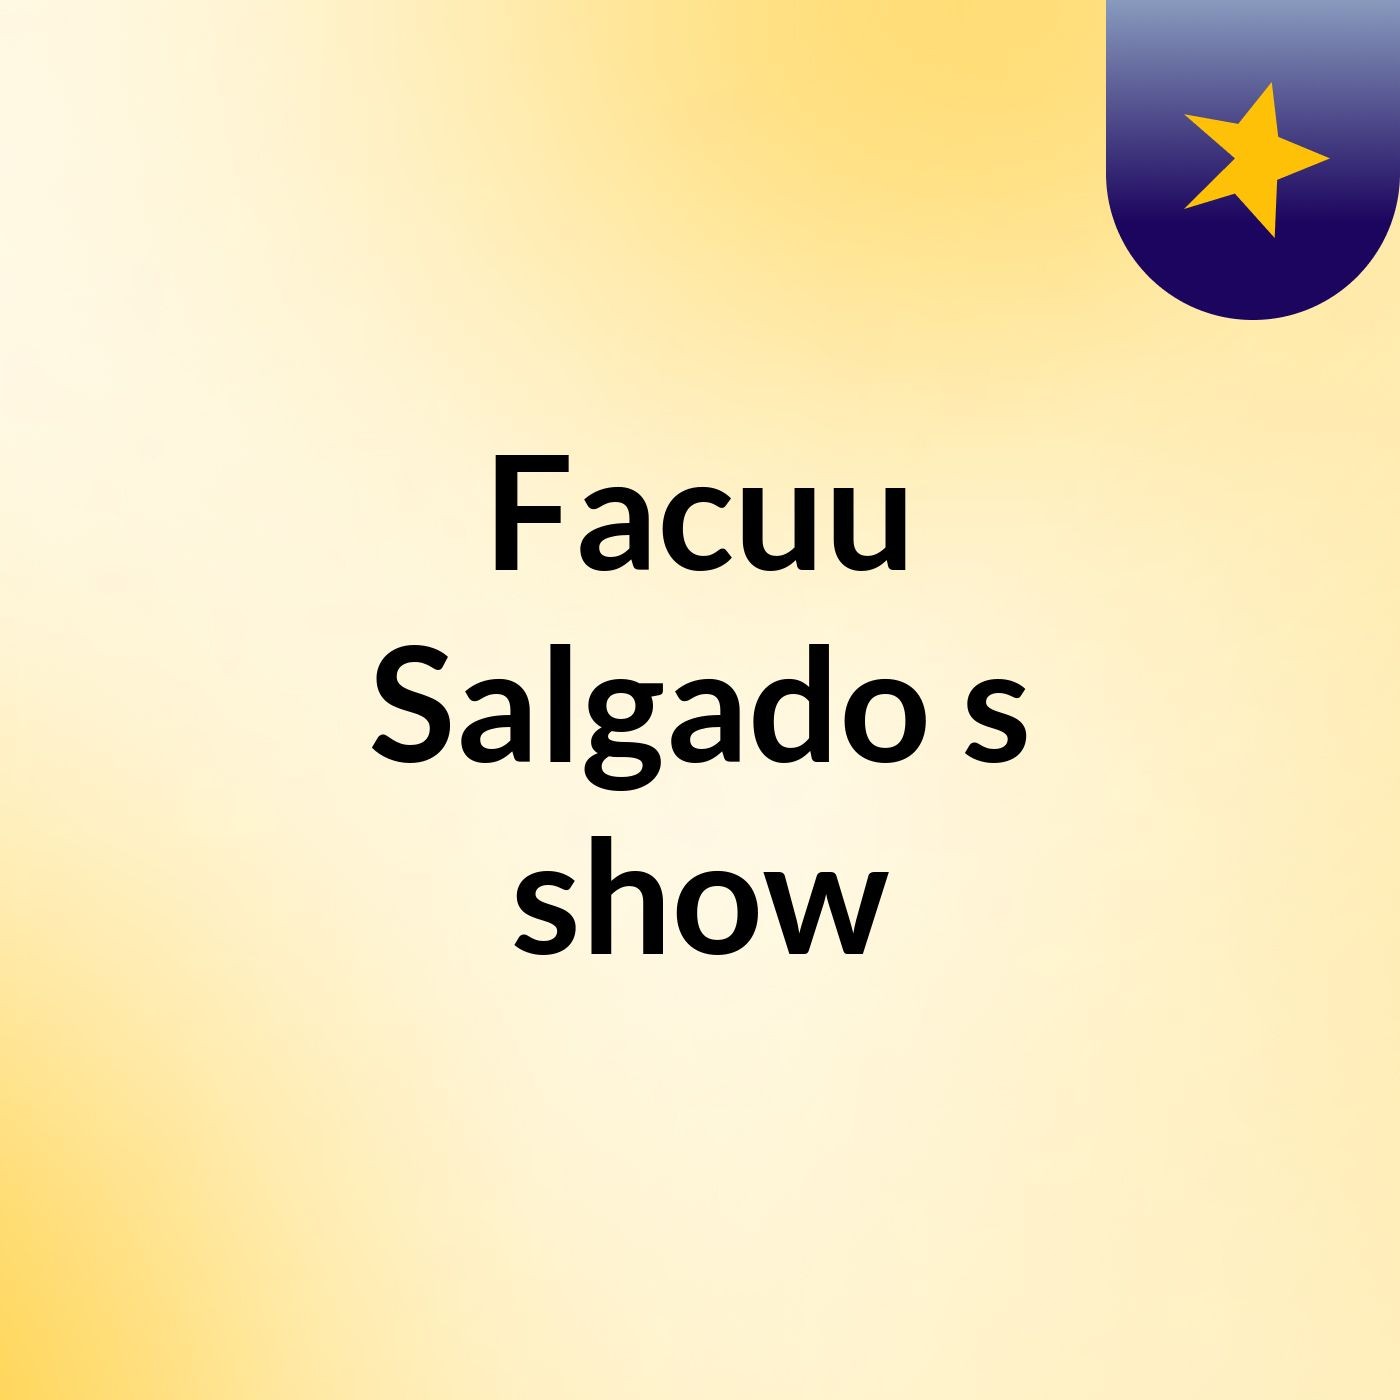 Facuu Salgado's show